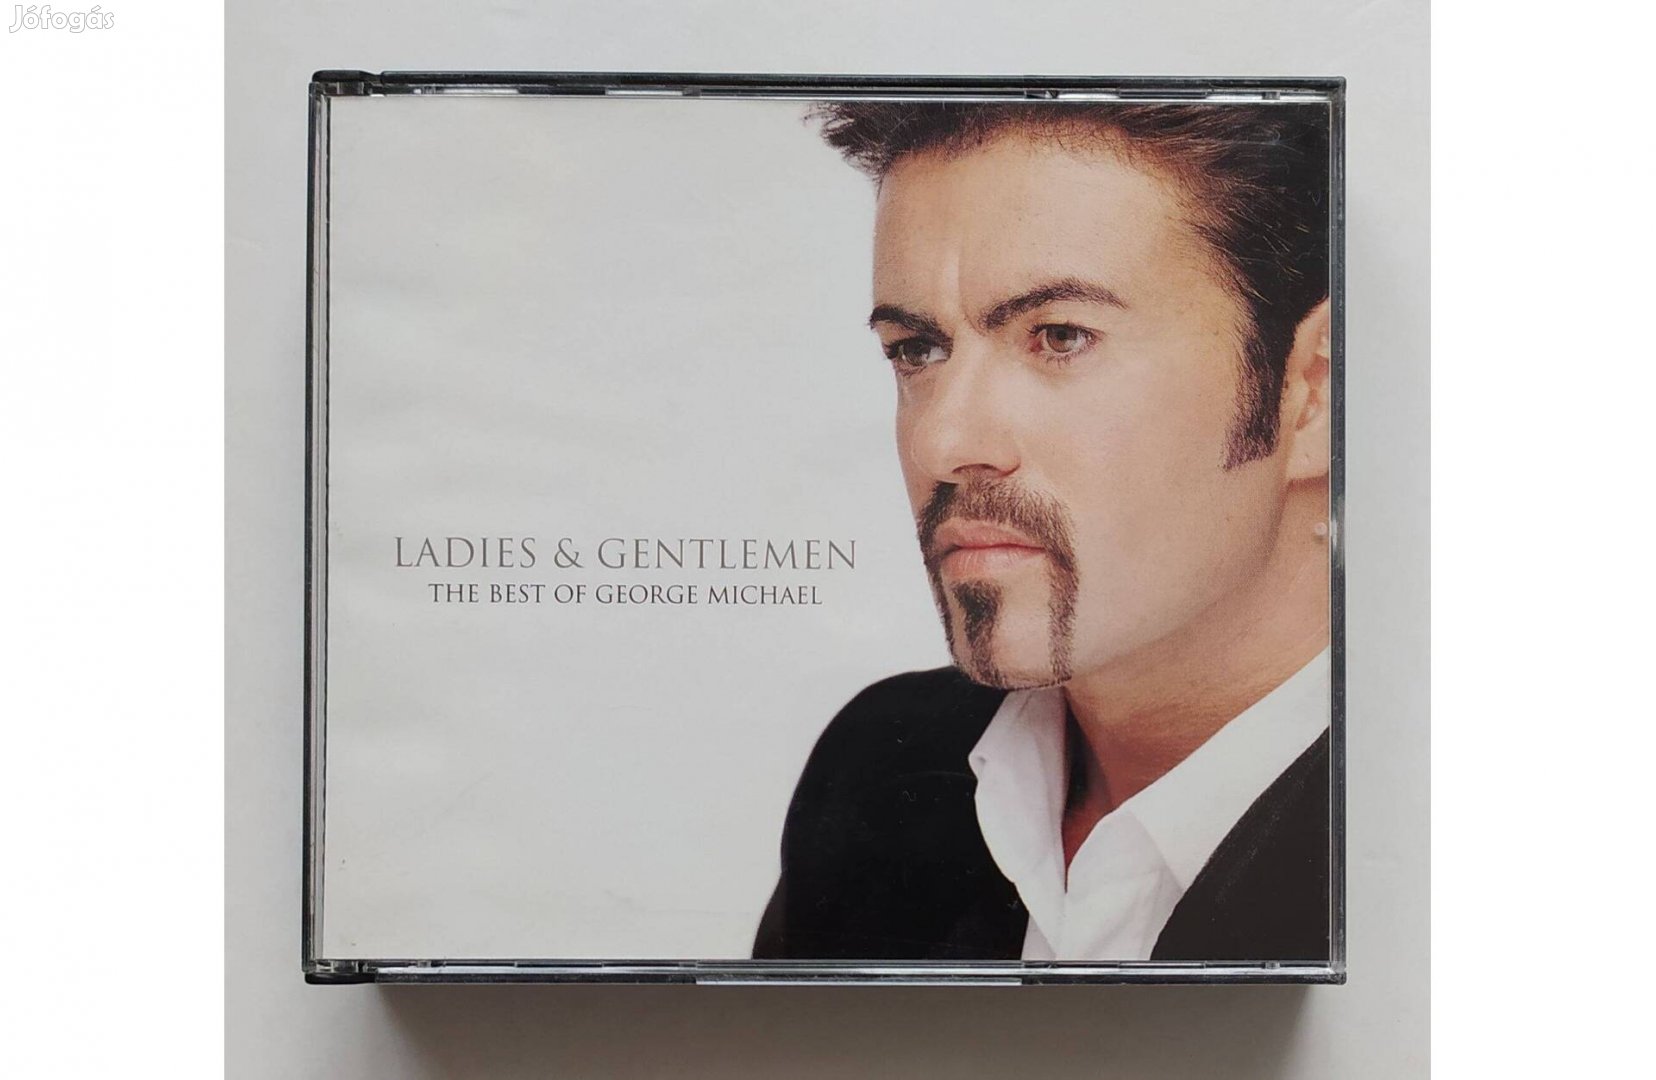 The Best of George Michael: Ladies & Gentlemen dubla CD válogatás